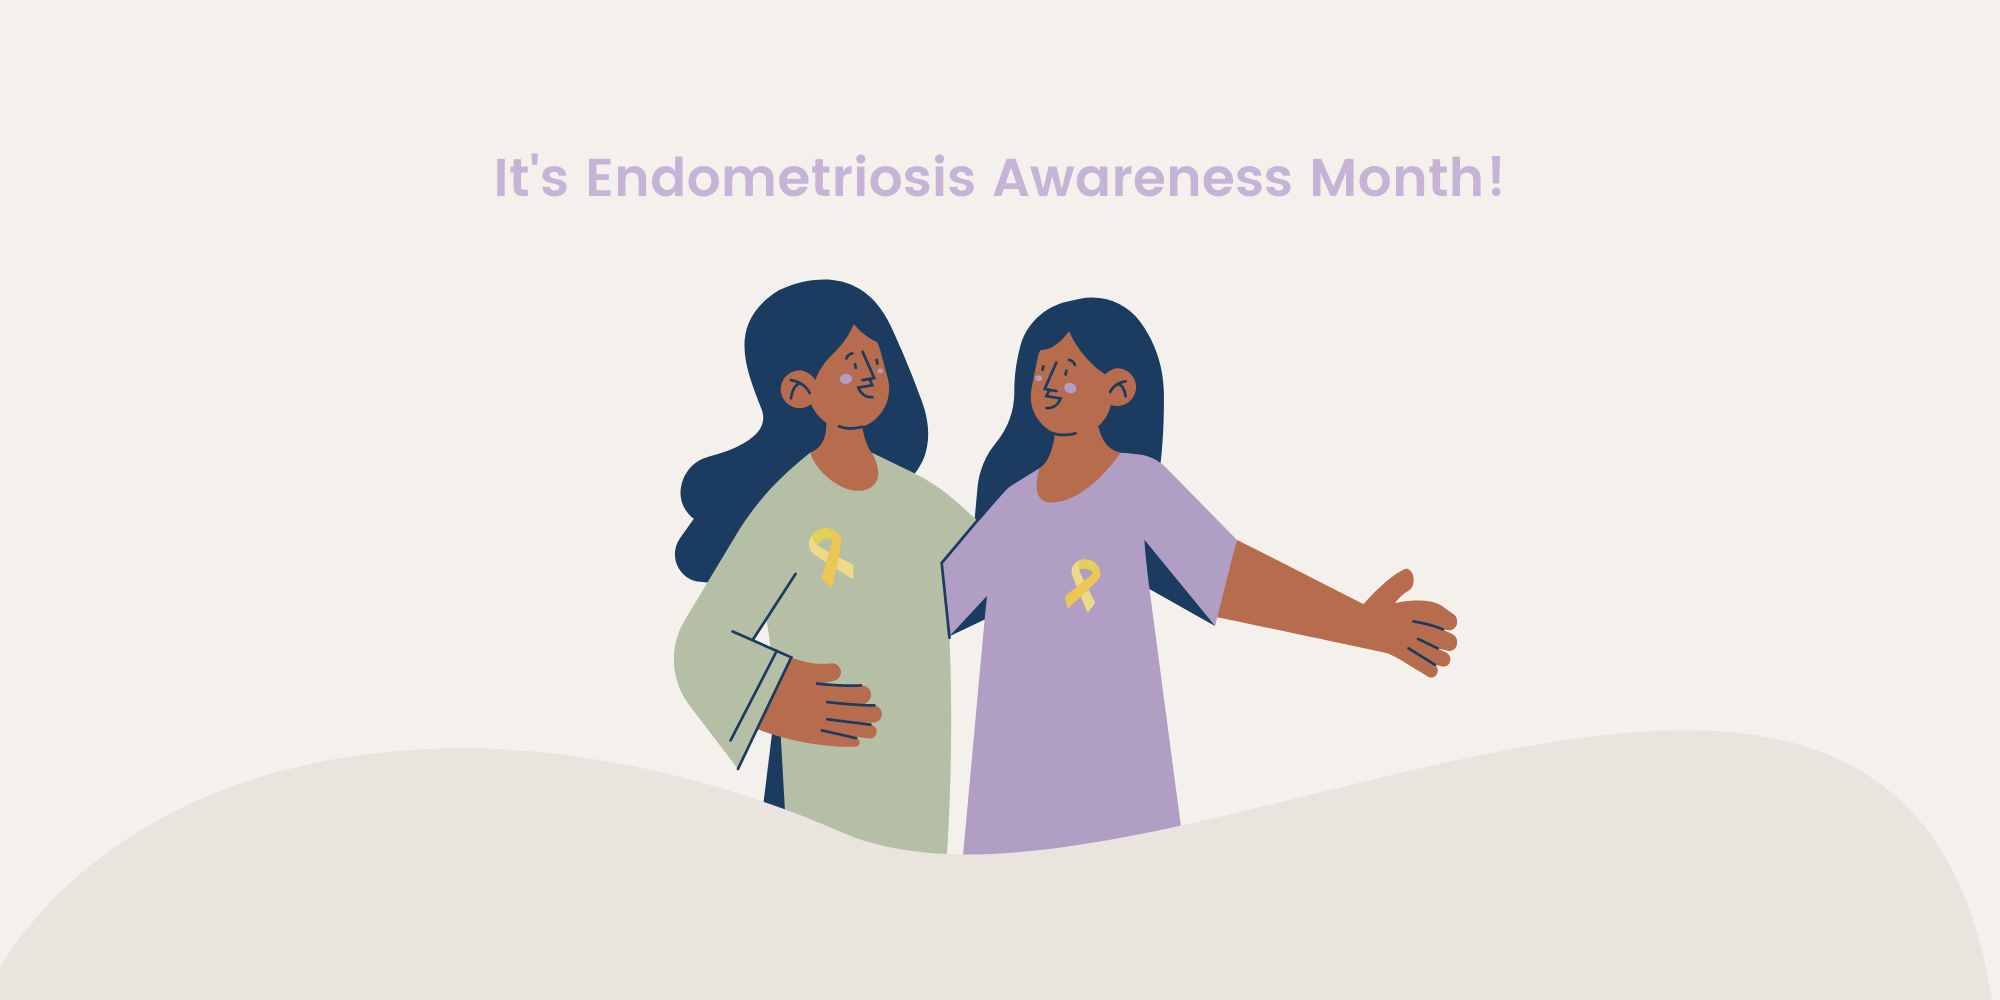 The undiscovered disease: Endometriosis